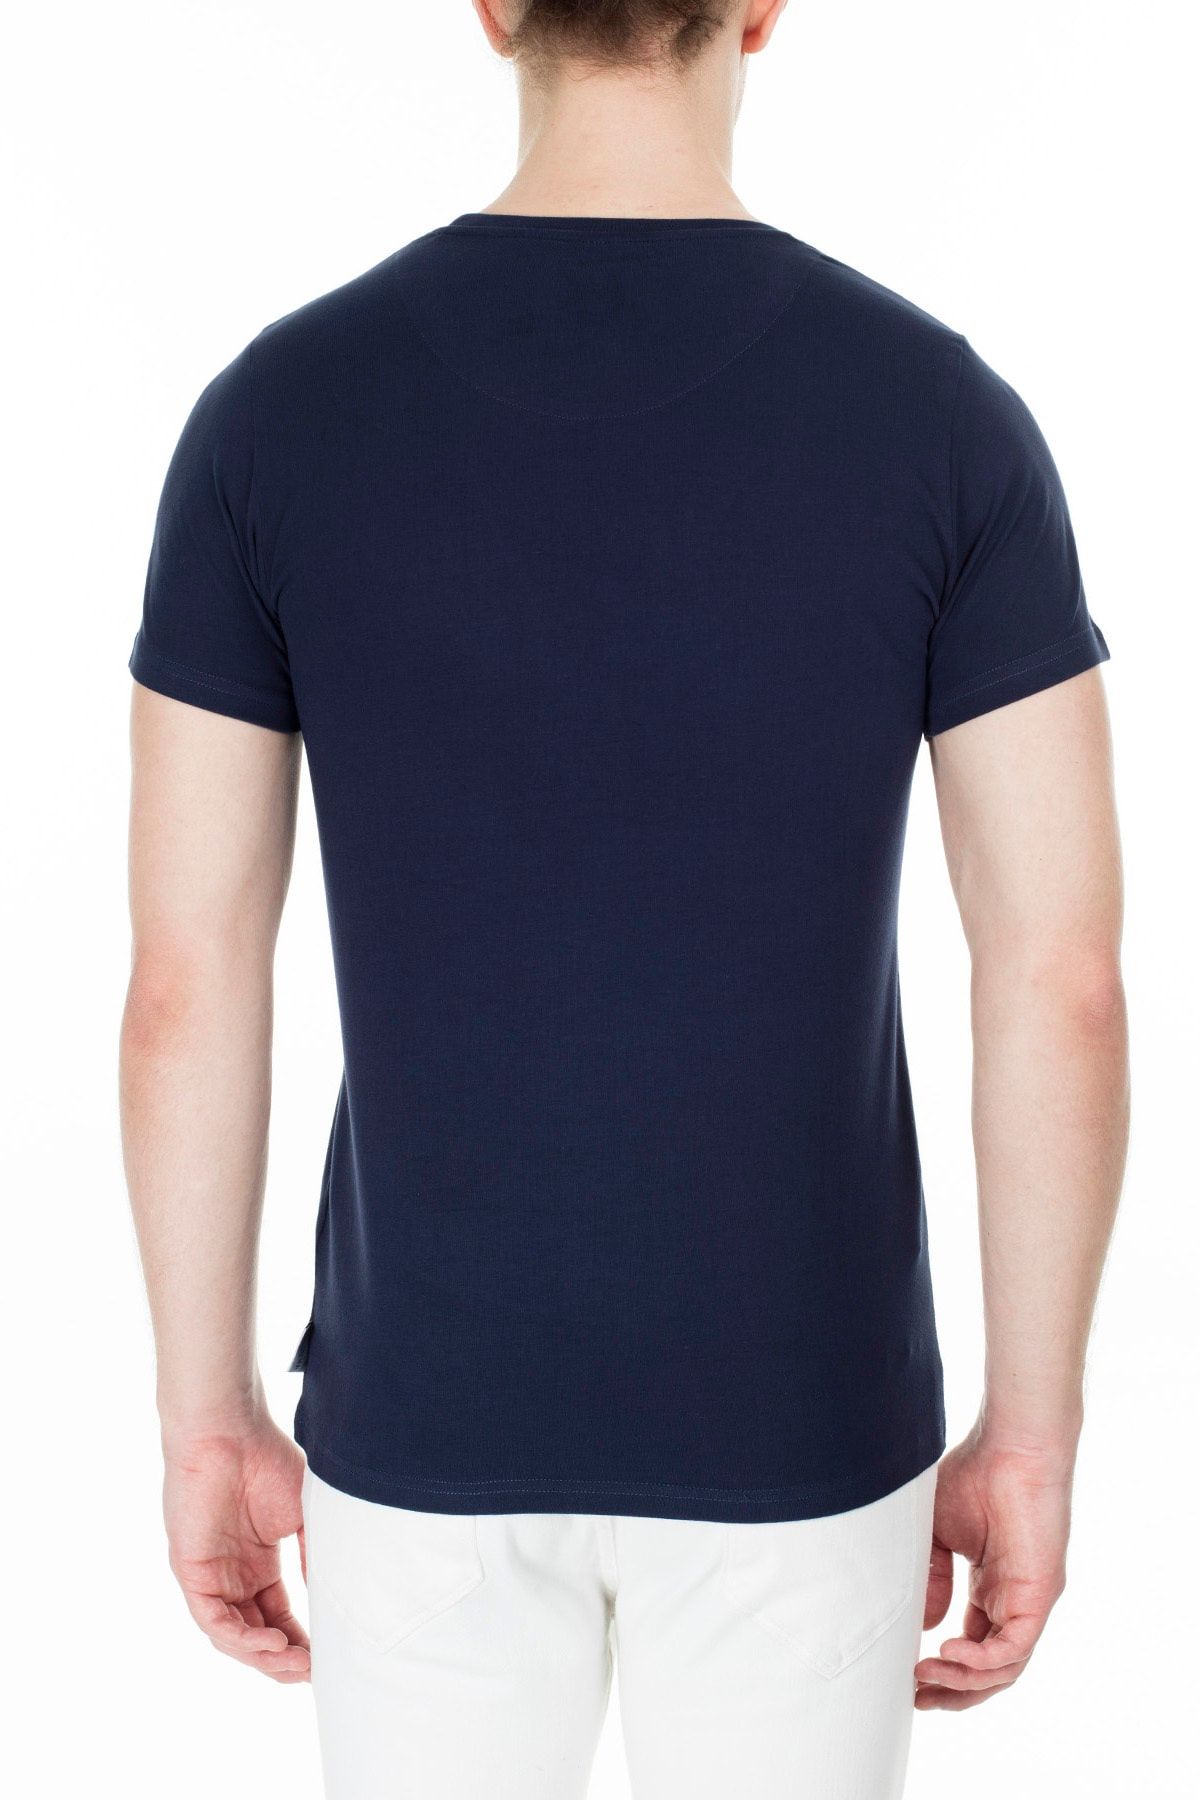 Cerruti 1881 T Shirt Erkek T Shirt 203